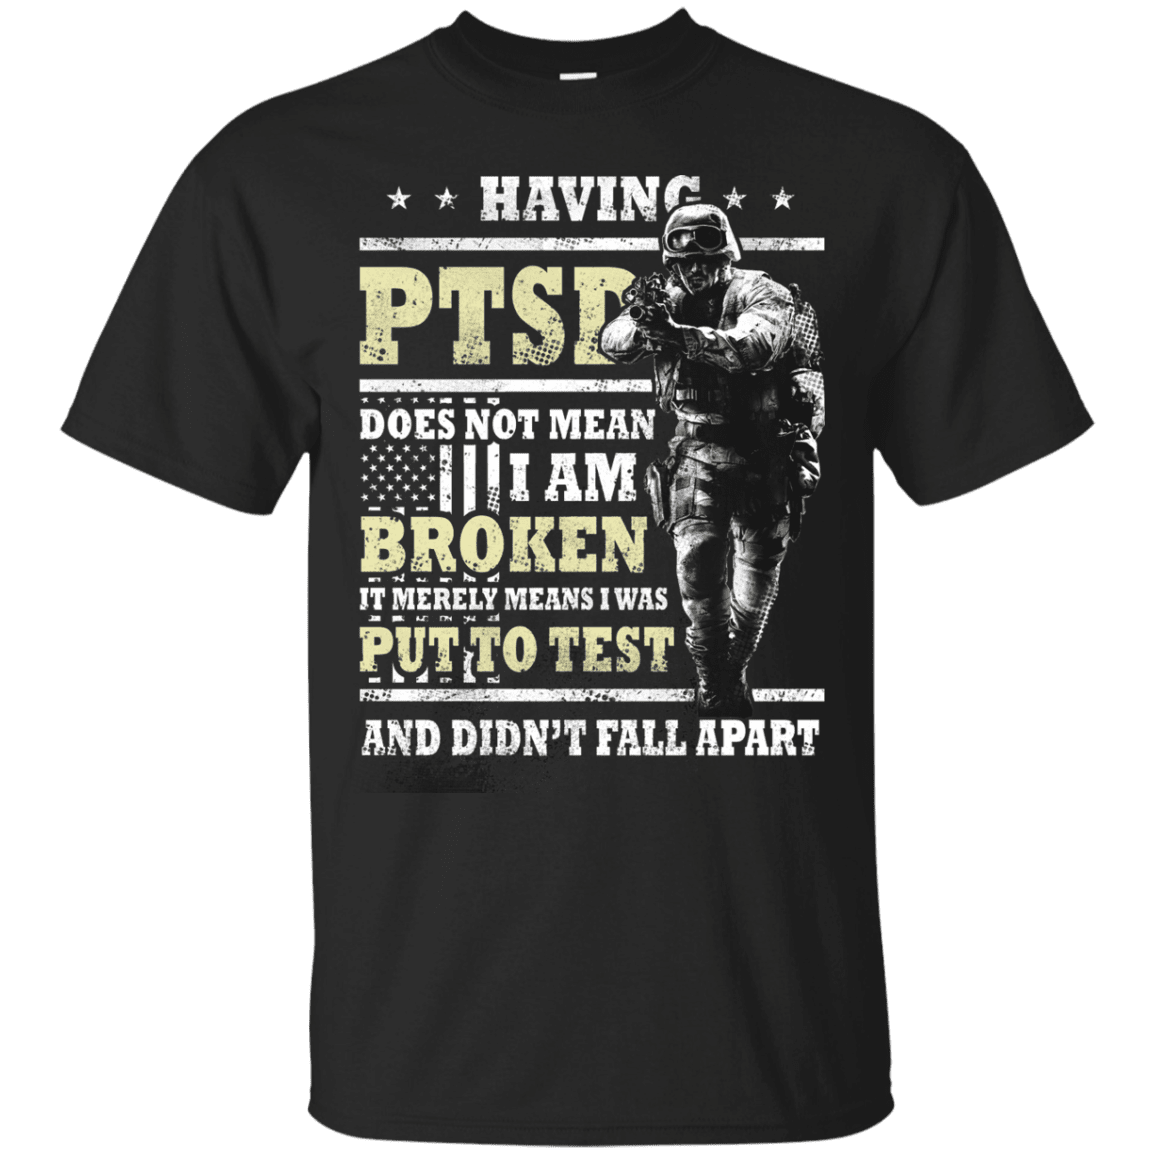 Military T-Shirt "Having PTSD Doen't Mean Broken" Front-TShirt-General-Veterans Nation